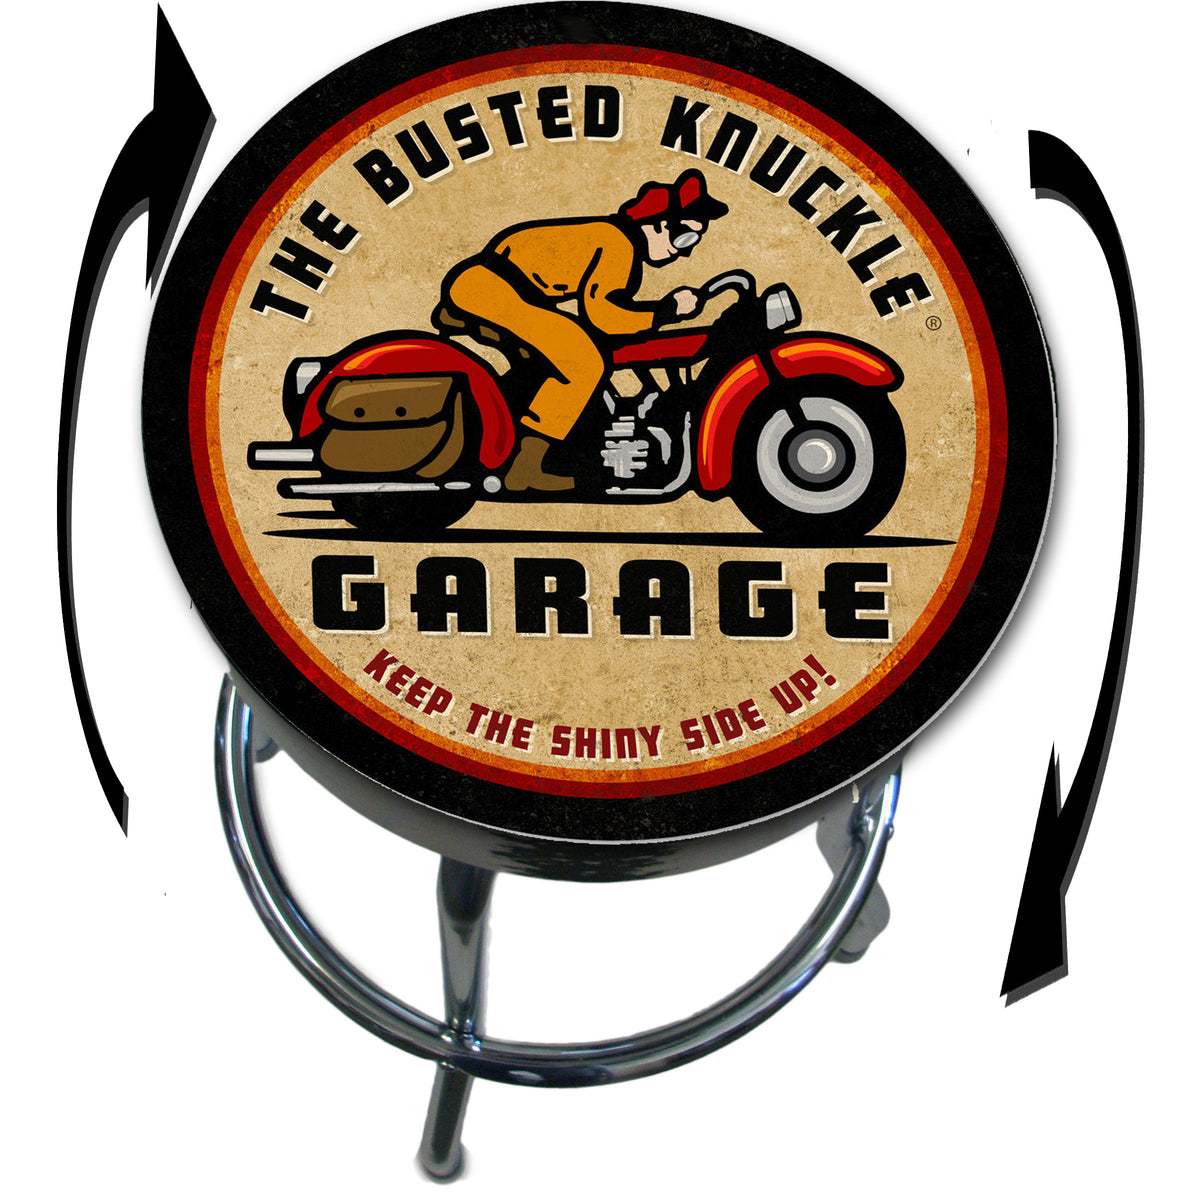 Busted Knuckle Garage Solo Biker Motorcycle Shop Stool